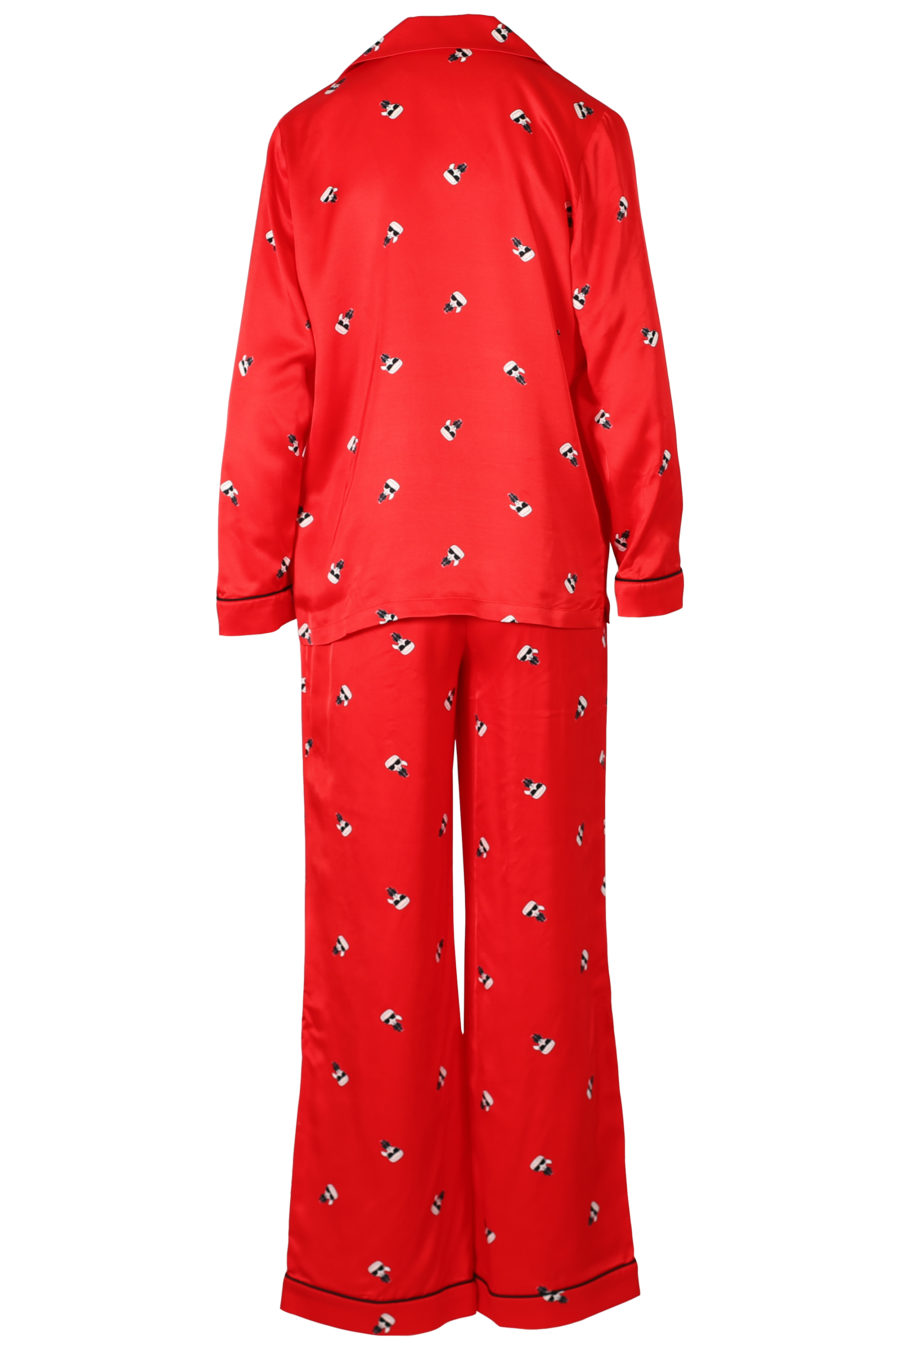 Red satin pyjama gift set - IMG 3291